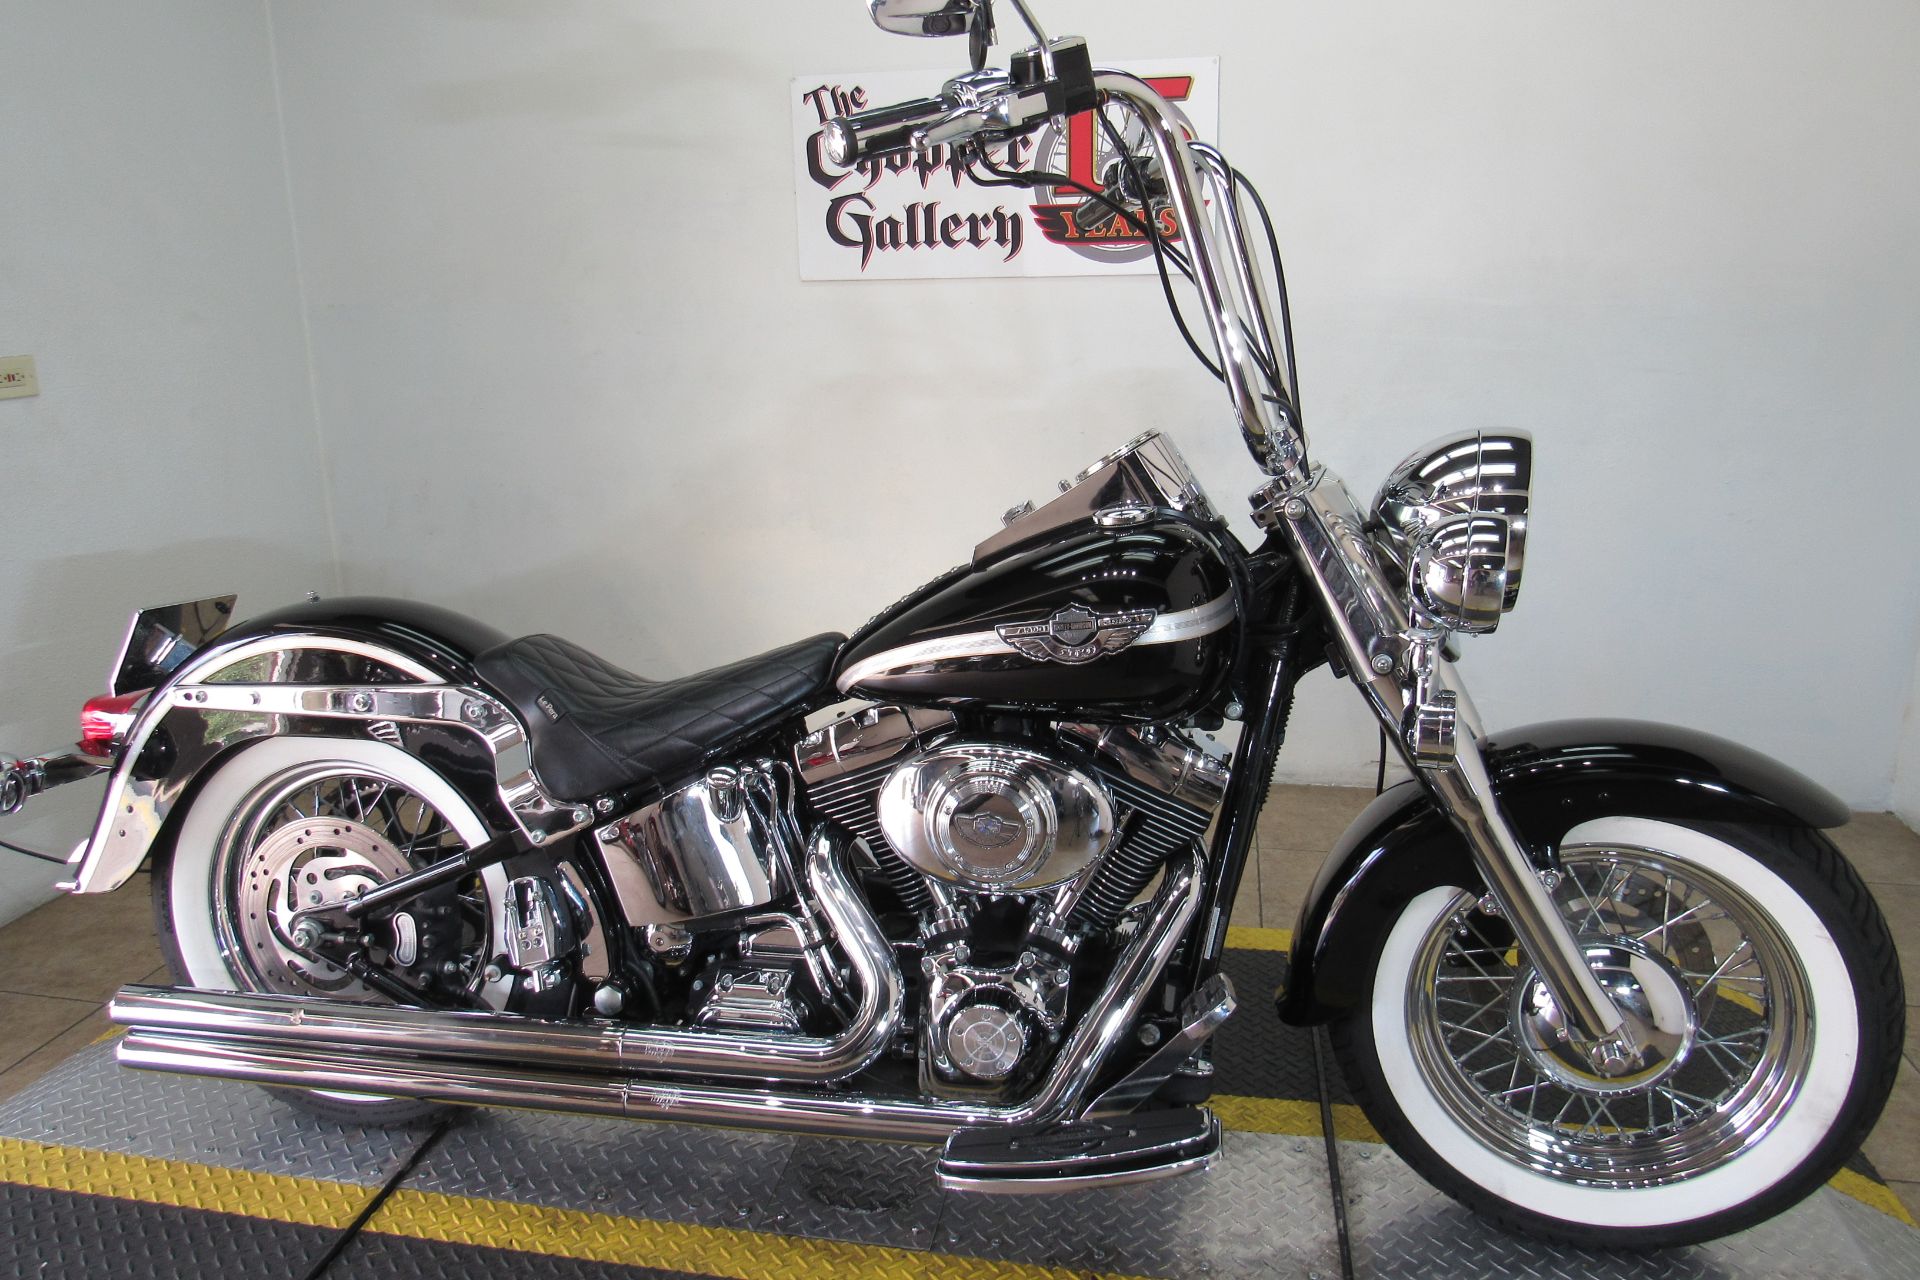 2003 Harley-Davidson HERITAGE in Temecula, California - Photo 3